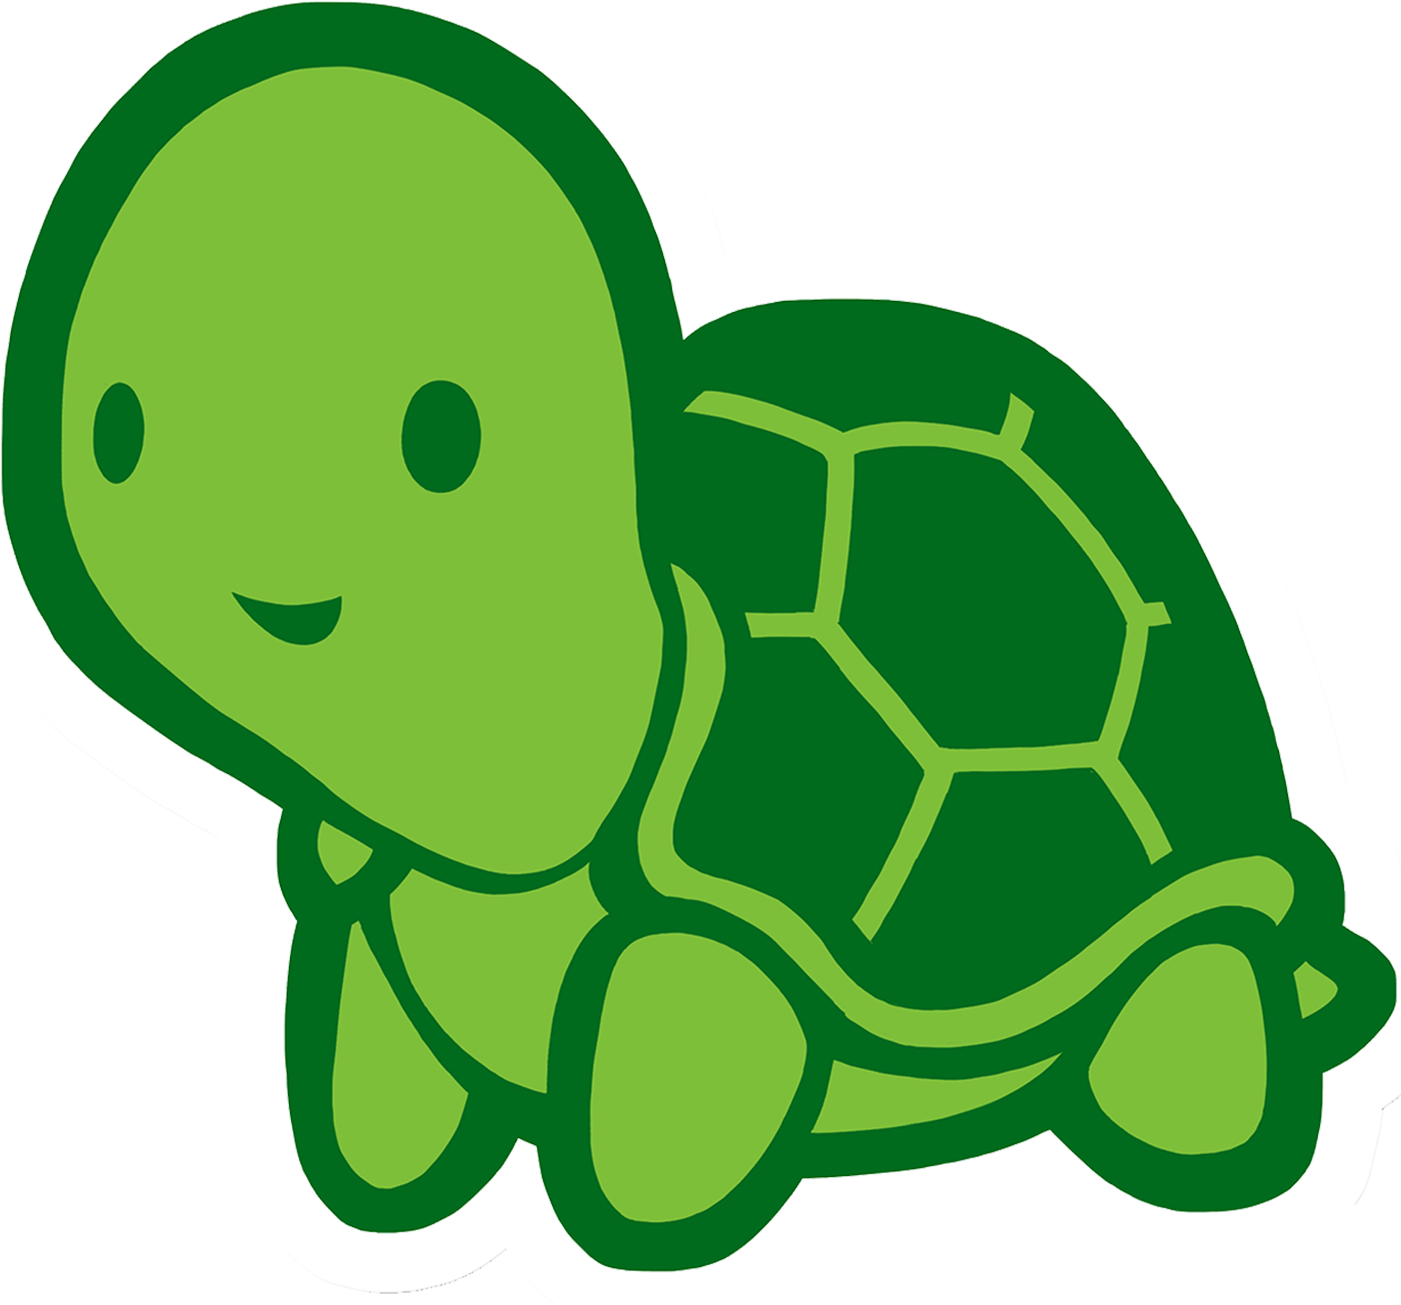 T turtle. Черепаха логотип. Черепаха рисунок. Черепаха мультяшная. Черепашка рисунок.